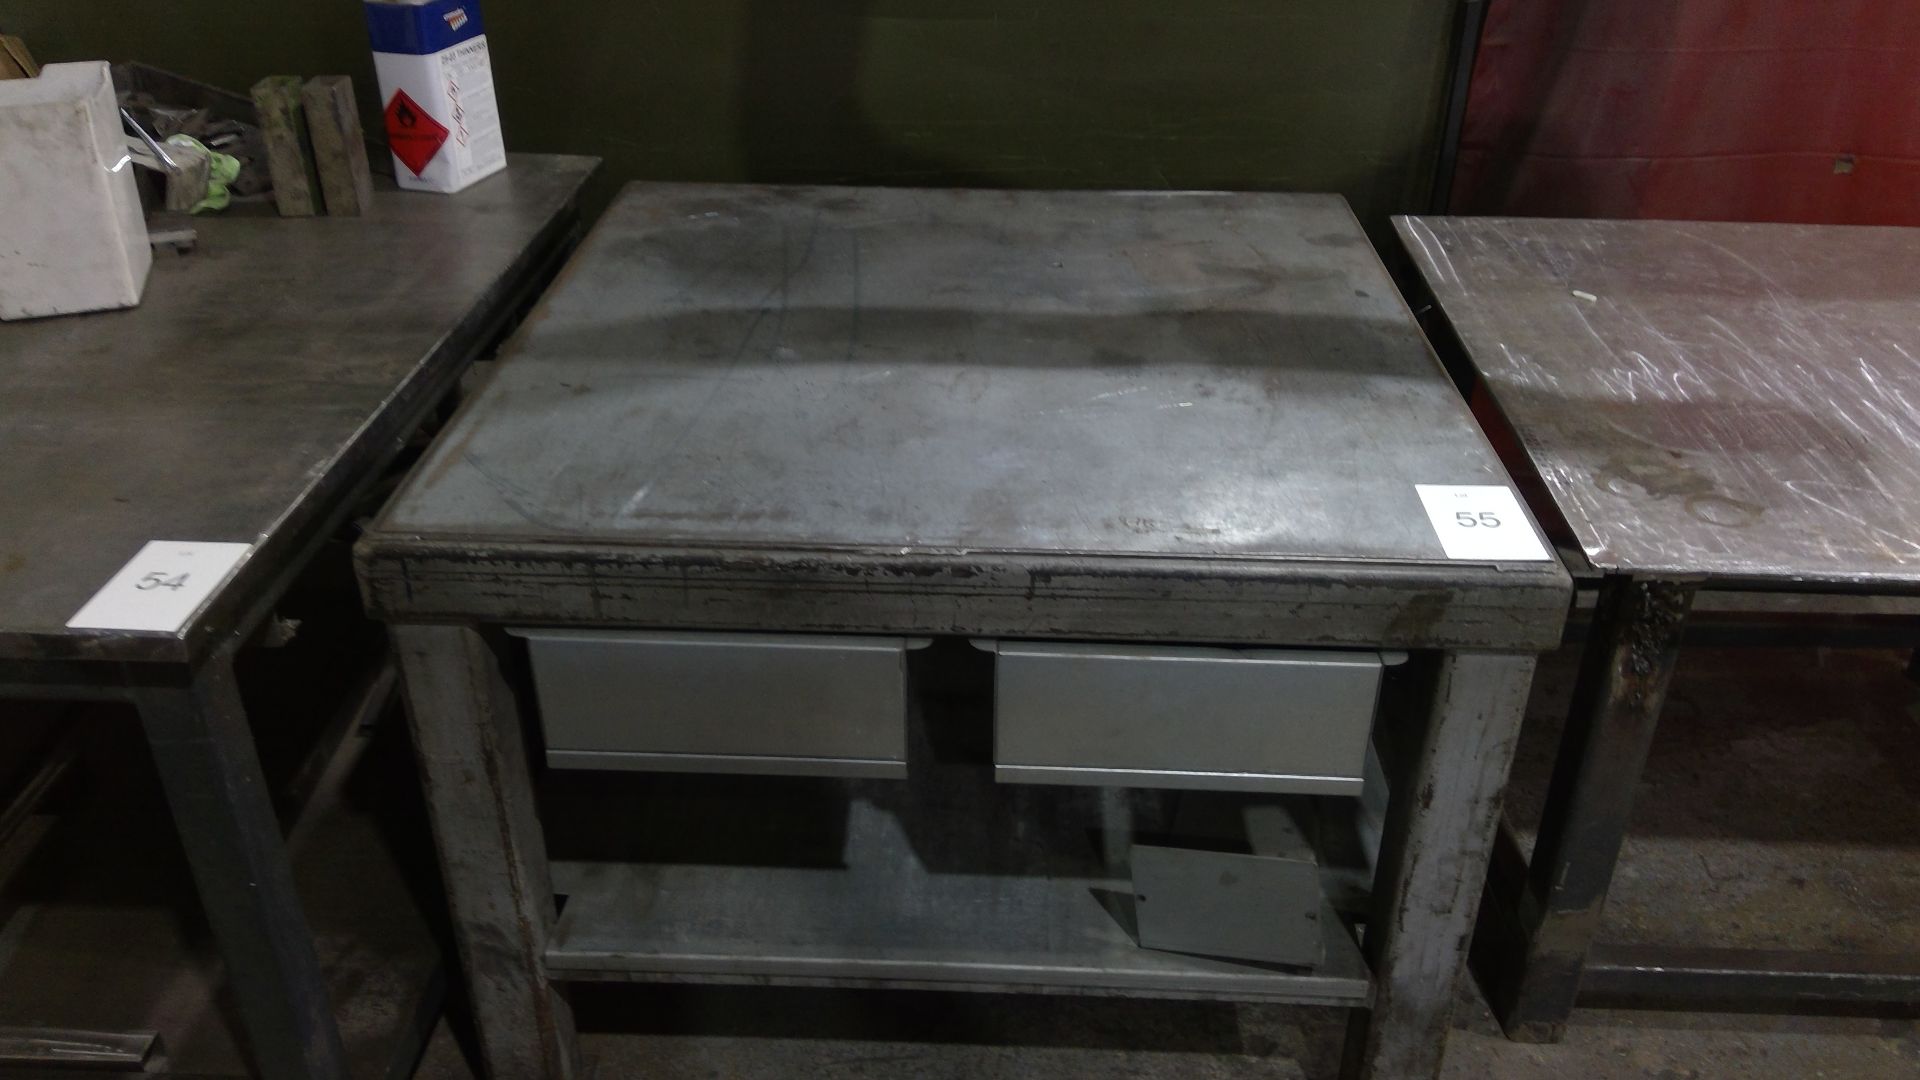 Steel workbench approx 1.25m x 1.25m with storage drawers